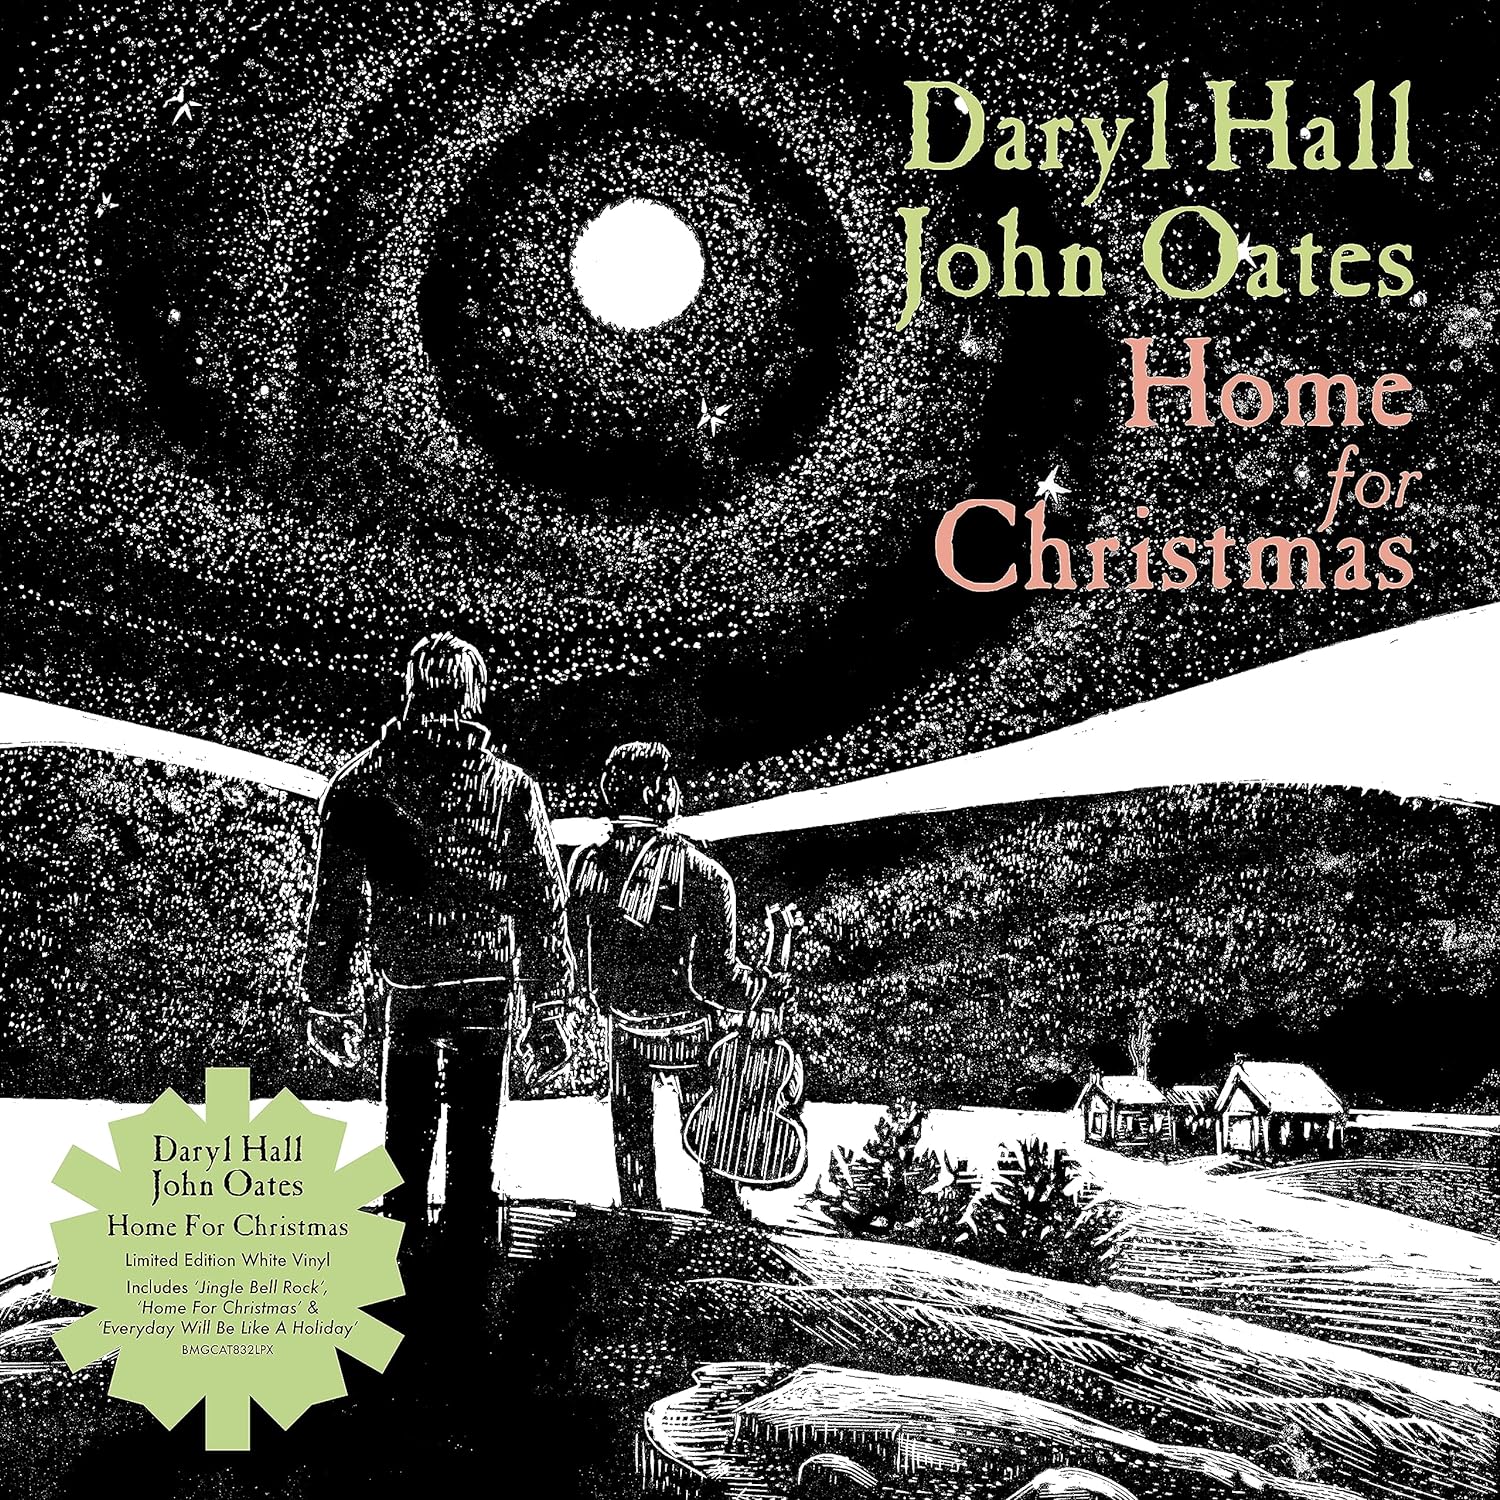 Daryl Hall & John Oates - Home For Christmas -ltd.-Daryl-Hall-John-Oates-Home-For-Christmas-ltd.-.jpg